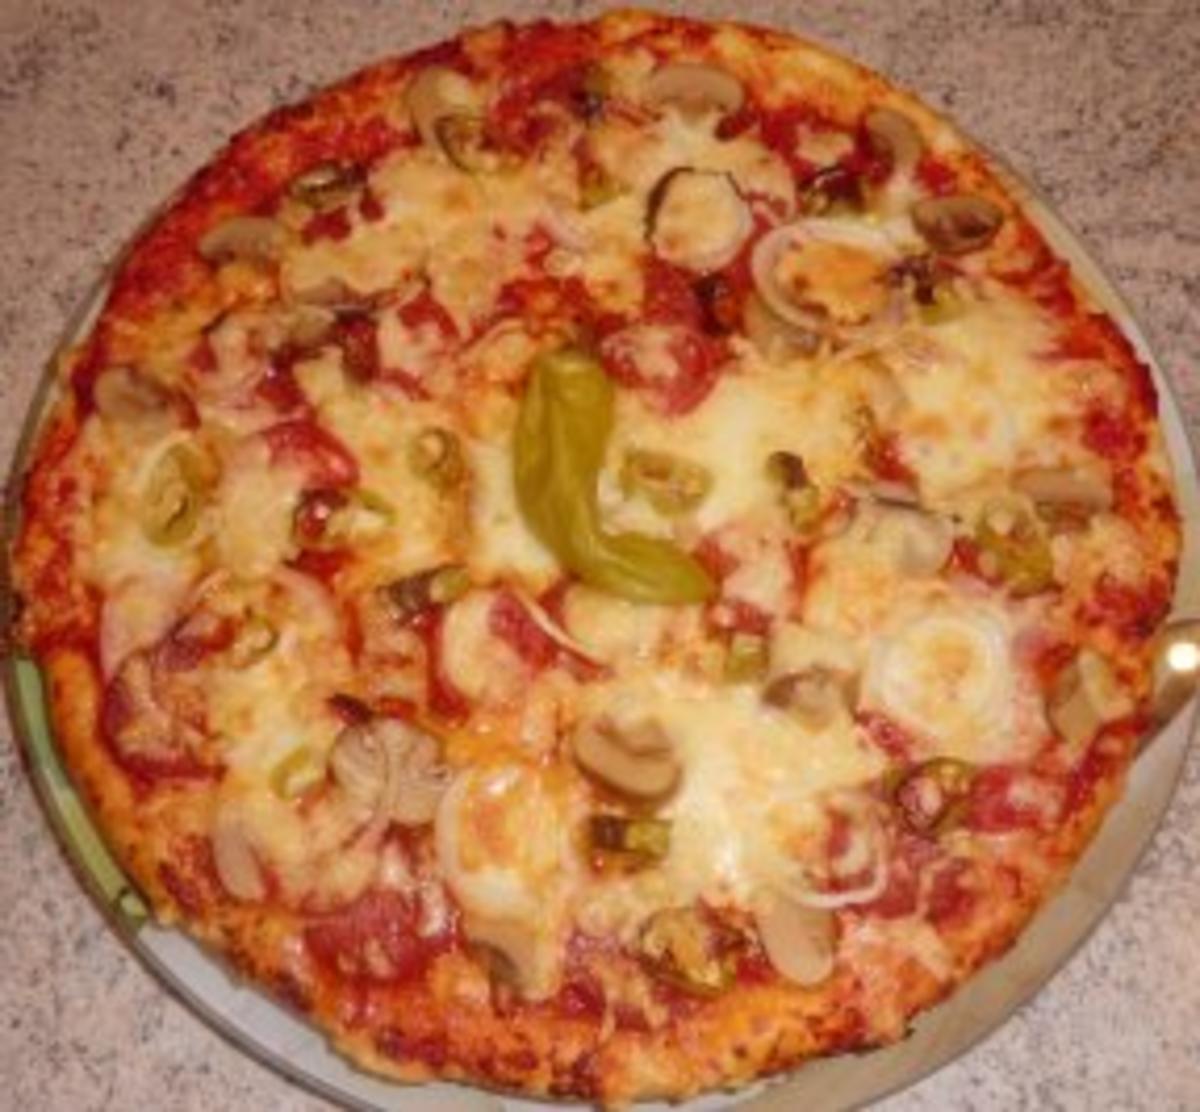 &#9829 Pizza - Diavolo &#9829 - Rezept